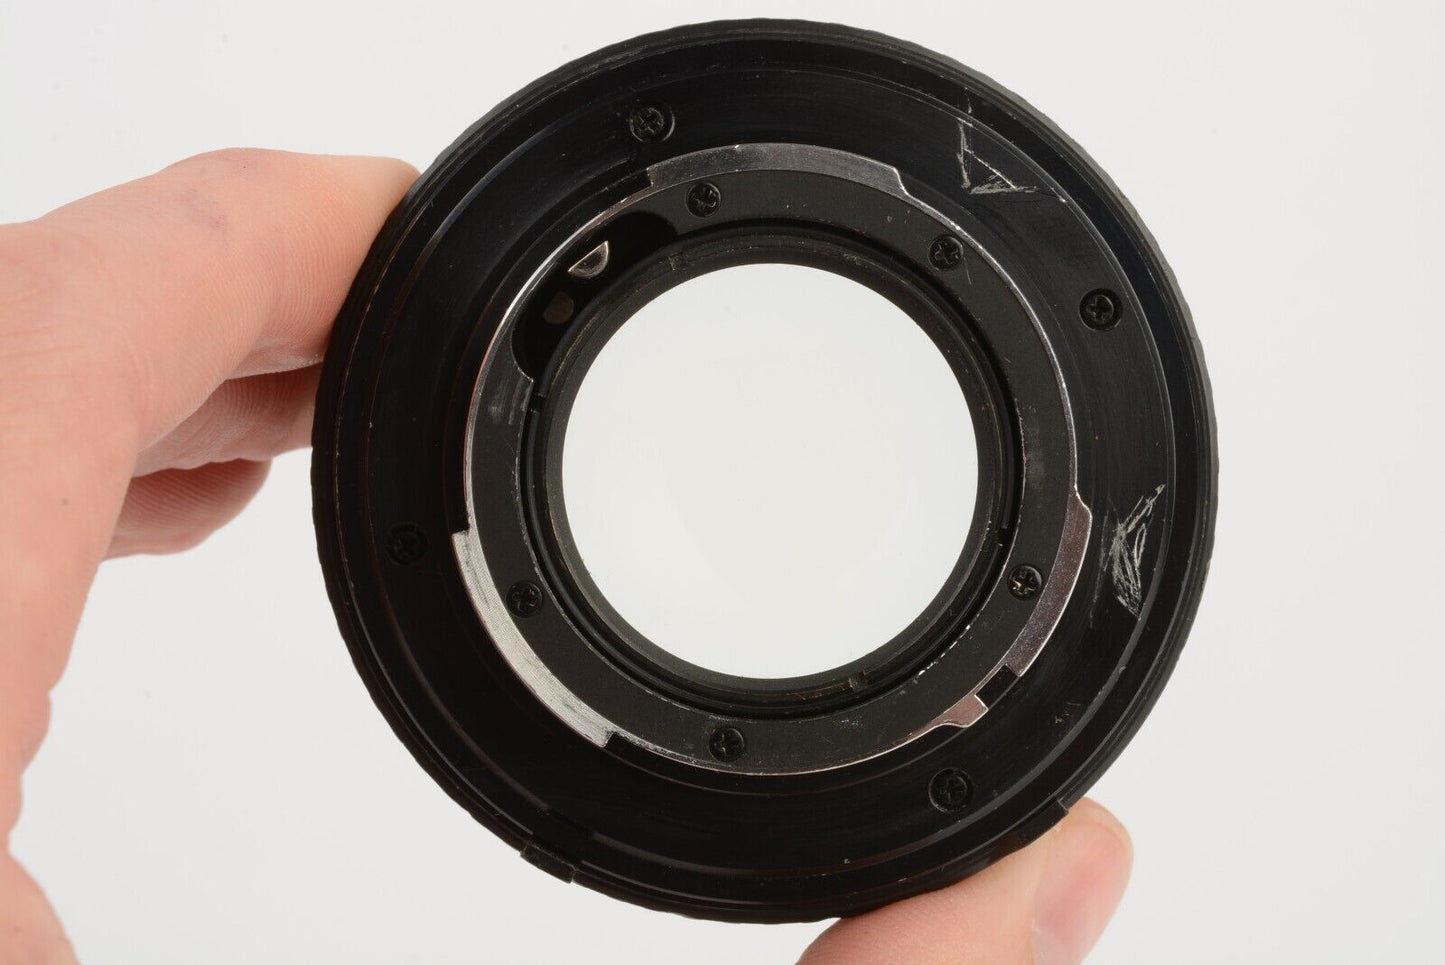 EXC++ MINOLTA ROKKOR-X 50mm f/1.4 PRIME LENS FOR MINOLTA MD MOUNT, CAPS, SHARP